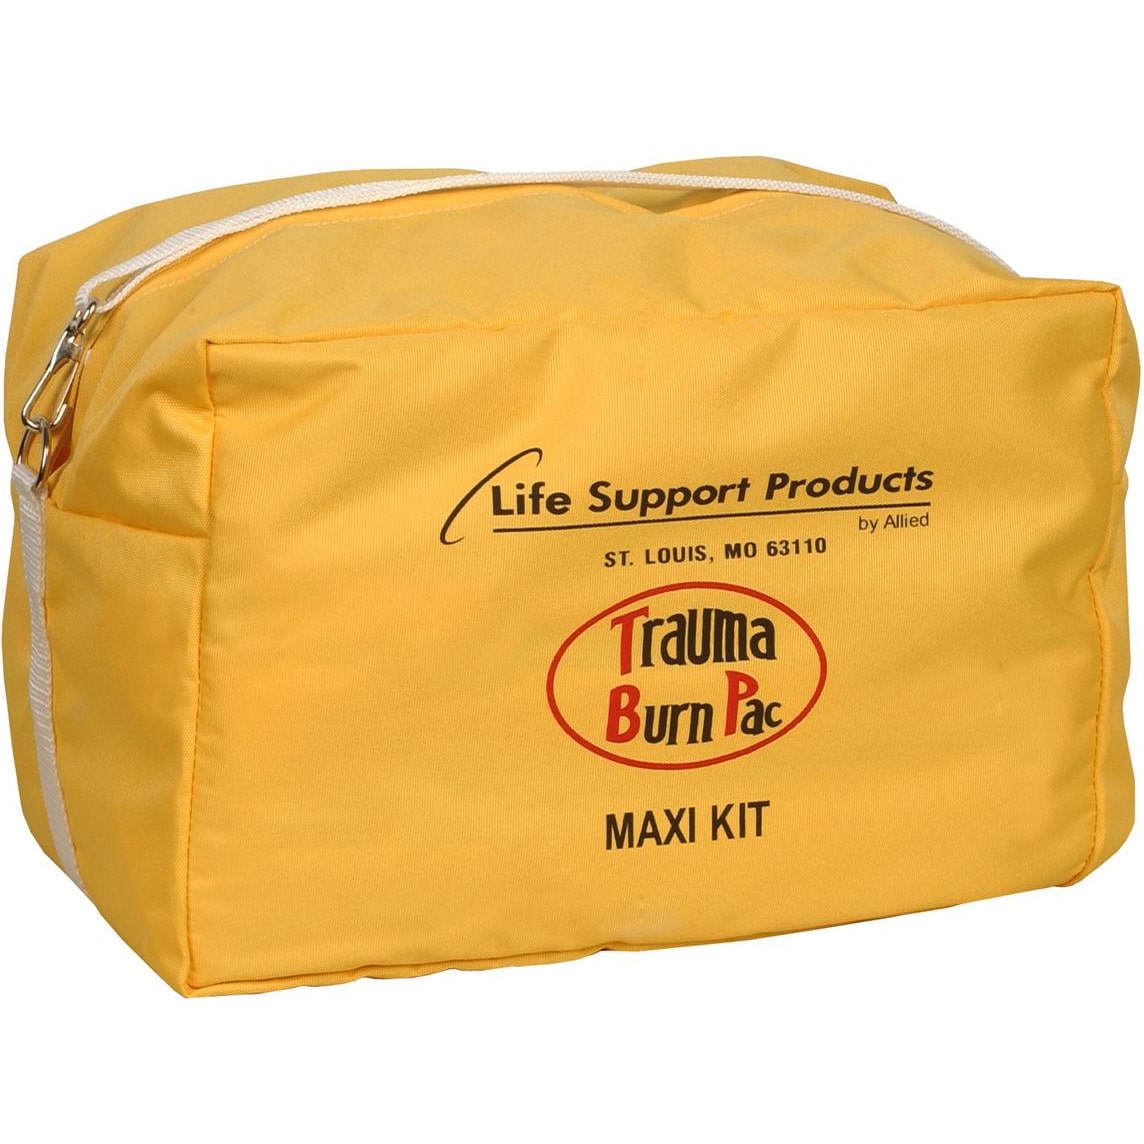 Allied Healthcare Trauma/Burn Kit Carry Bag - For Maxi Kit